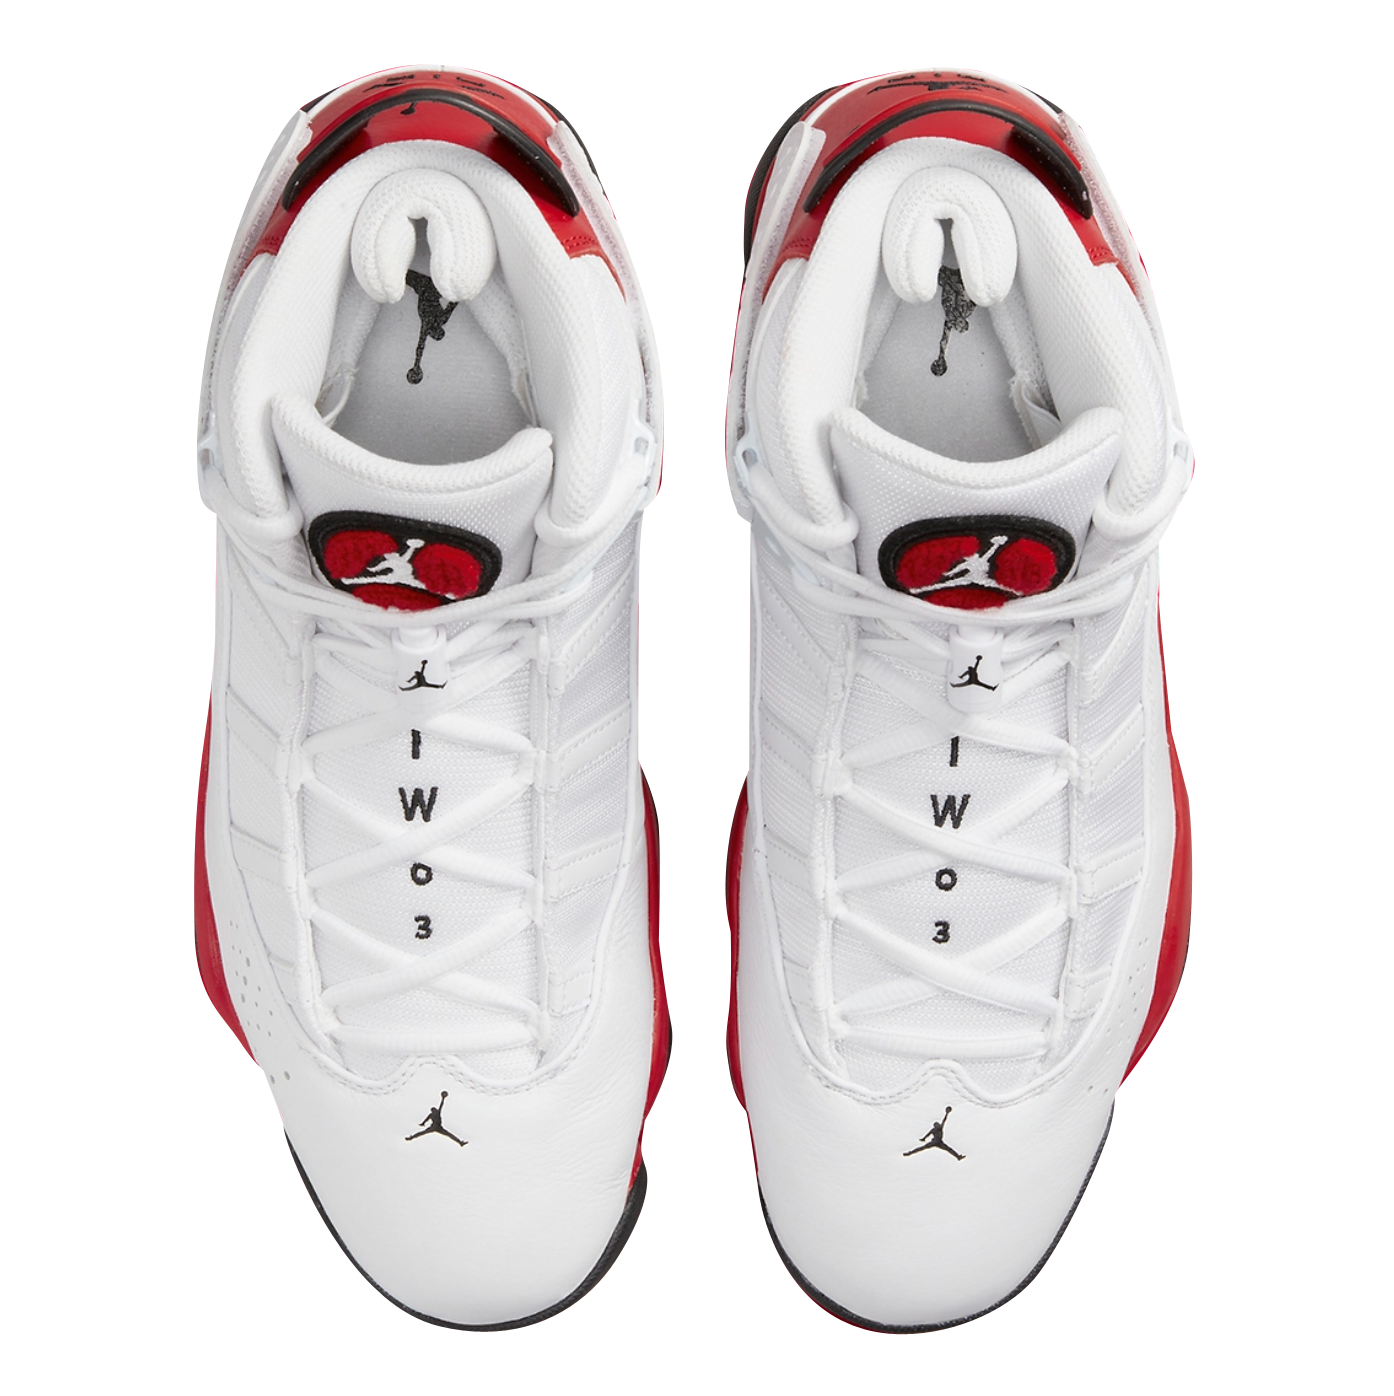 Jordan 6 Rings White Red 322992-126